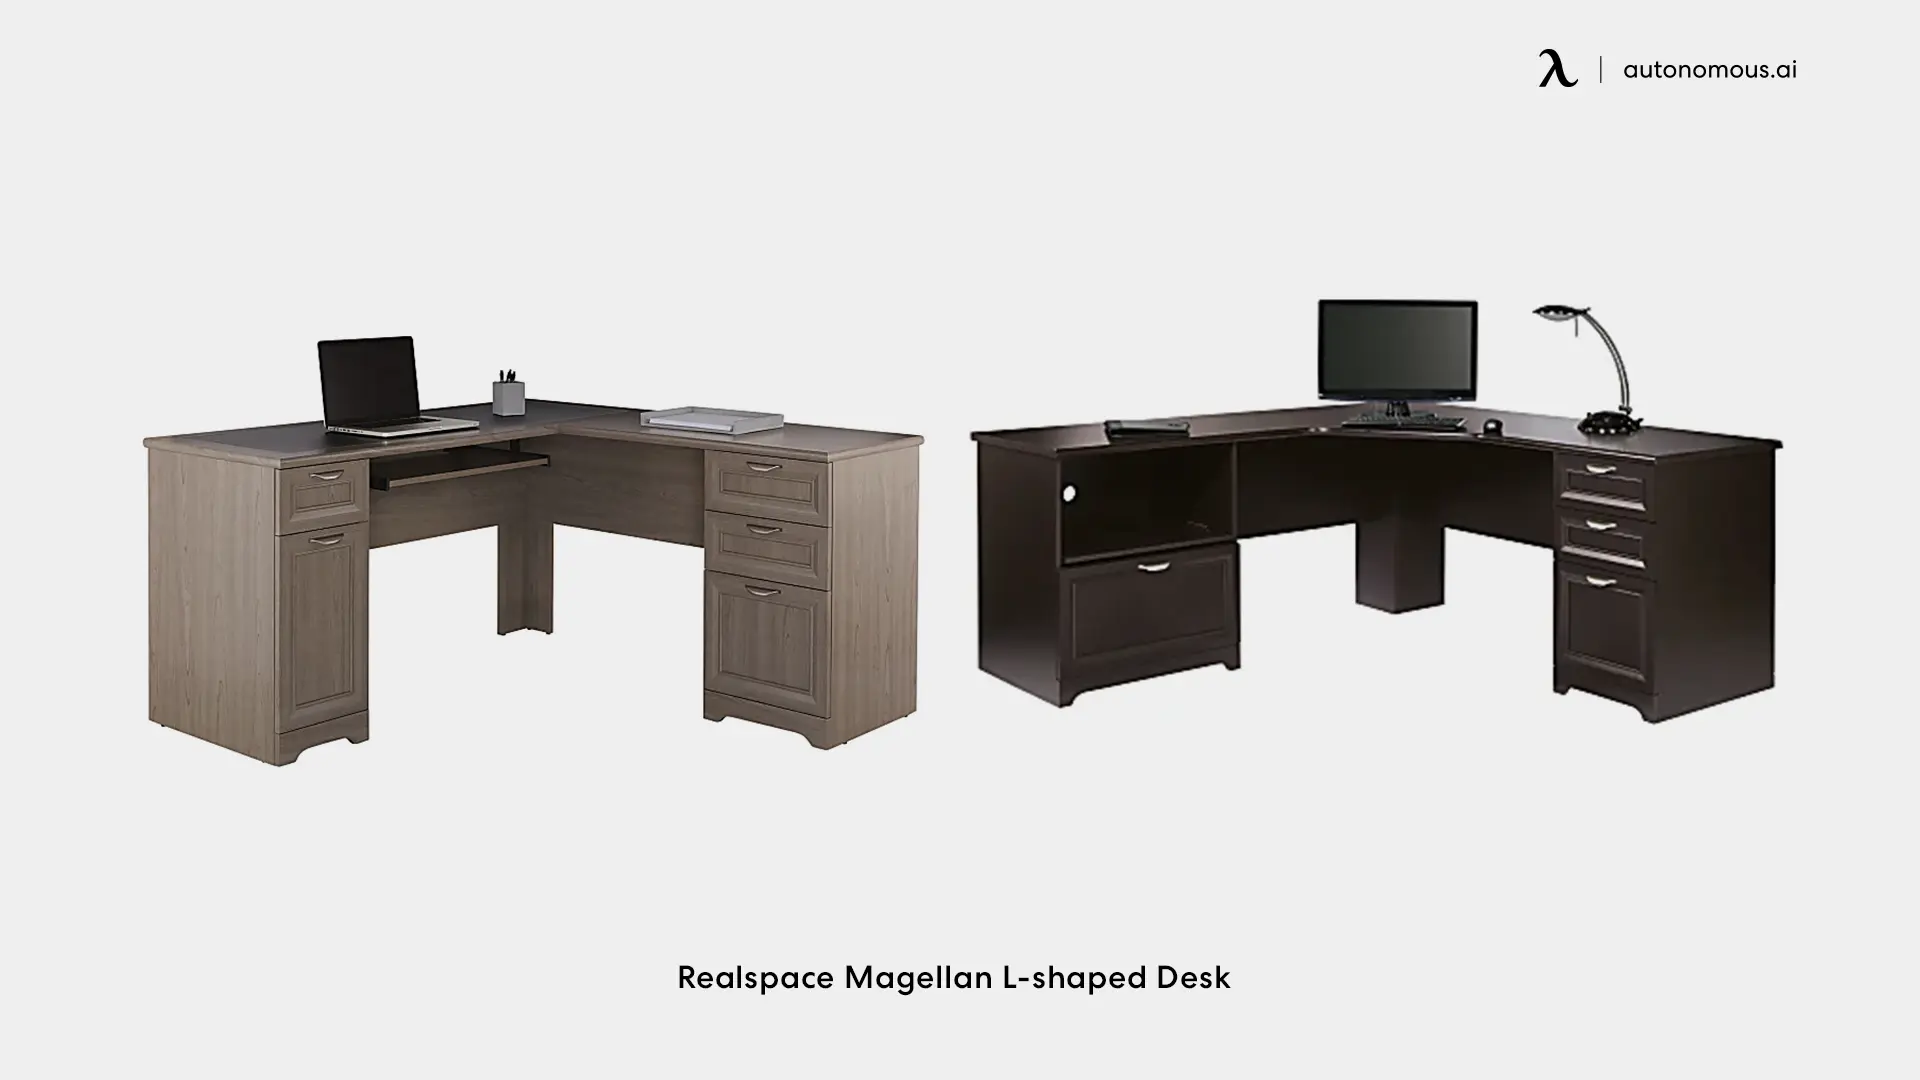 Realspace Magellan L-shaped Desk